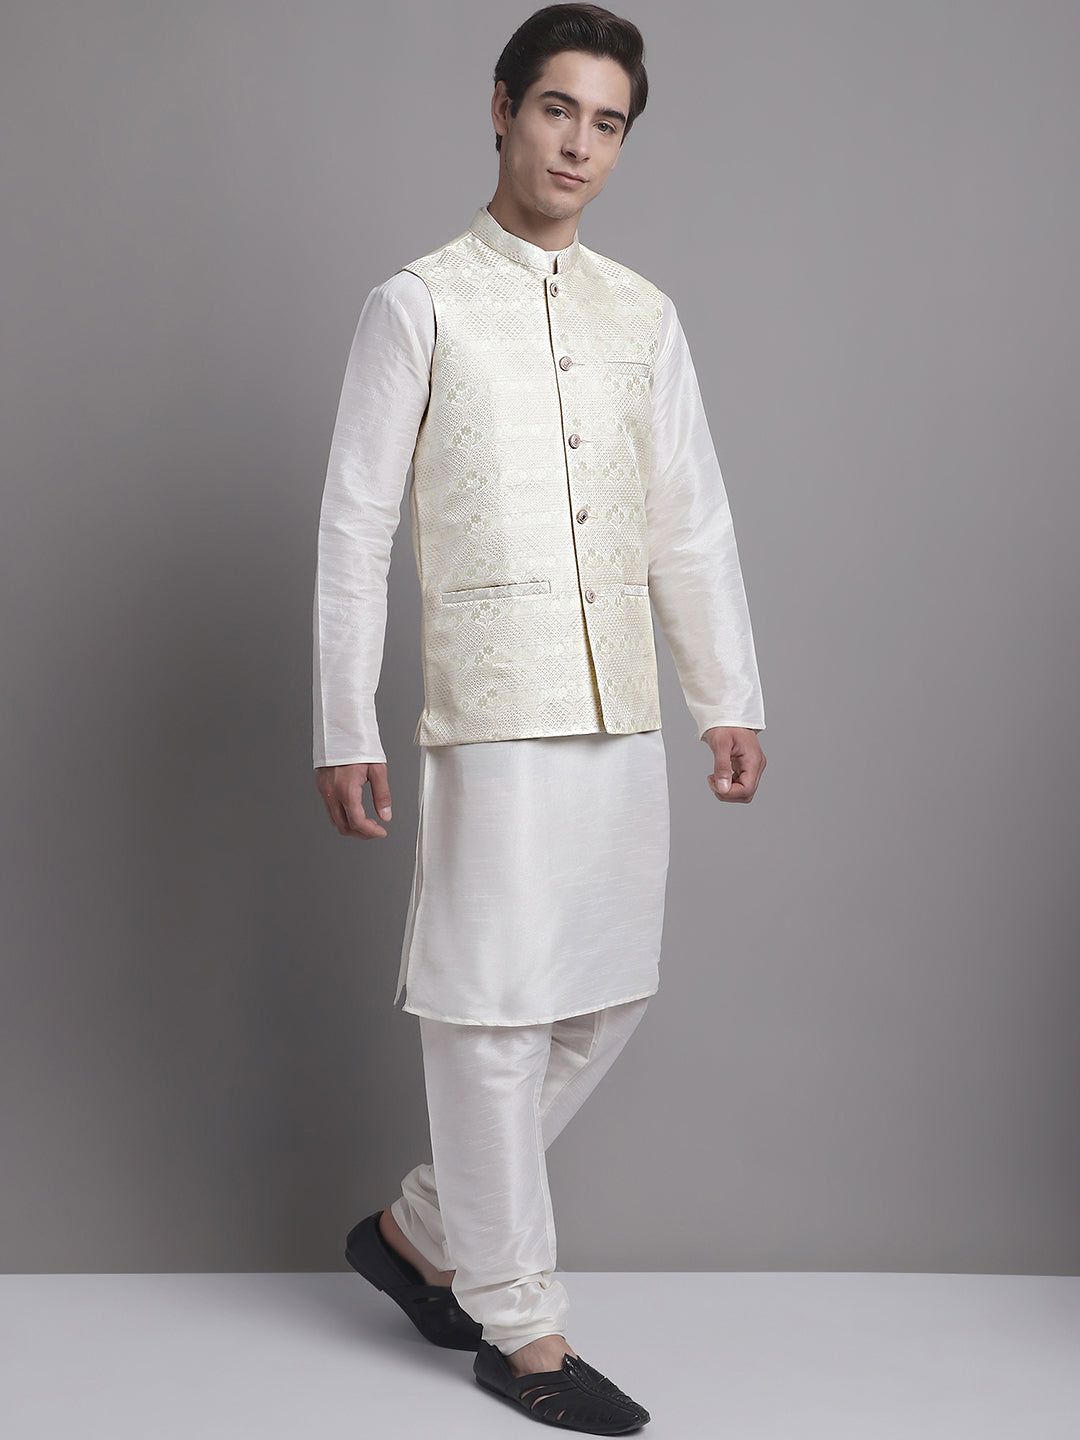 Men's Cream Woven Design Nehru Jacket With Solid Kurta Pyjama.